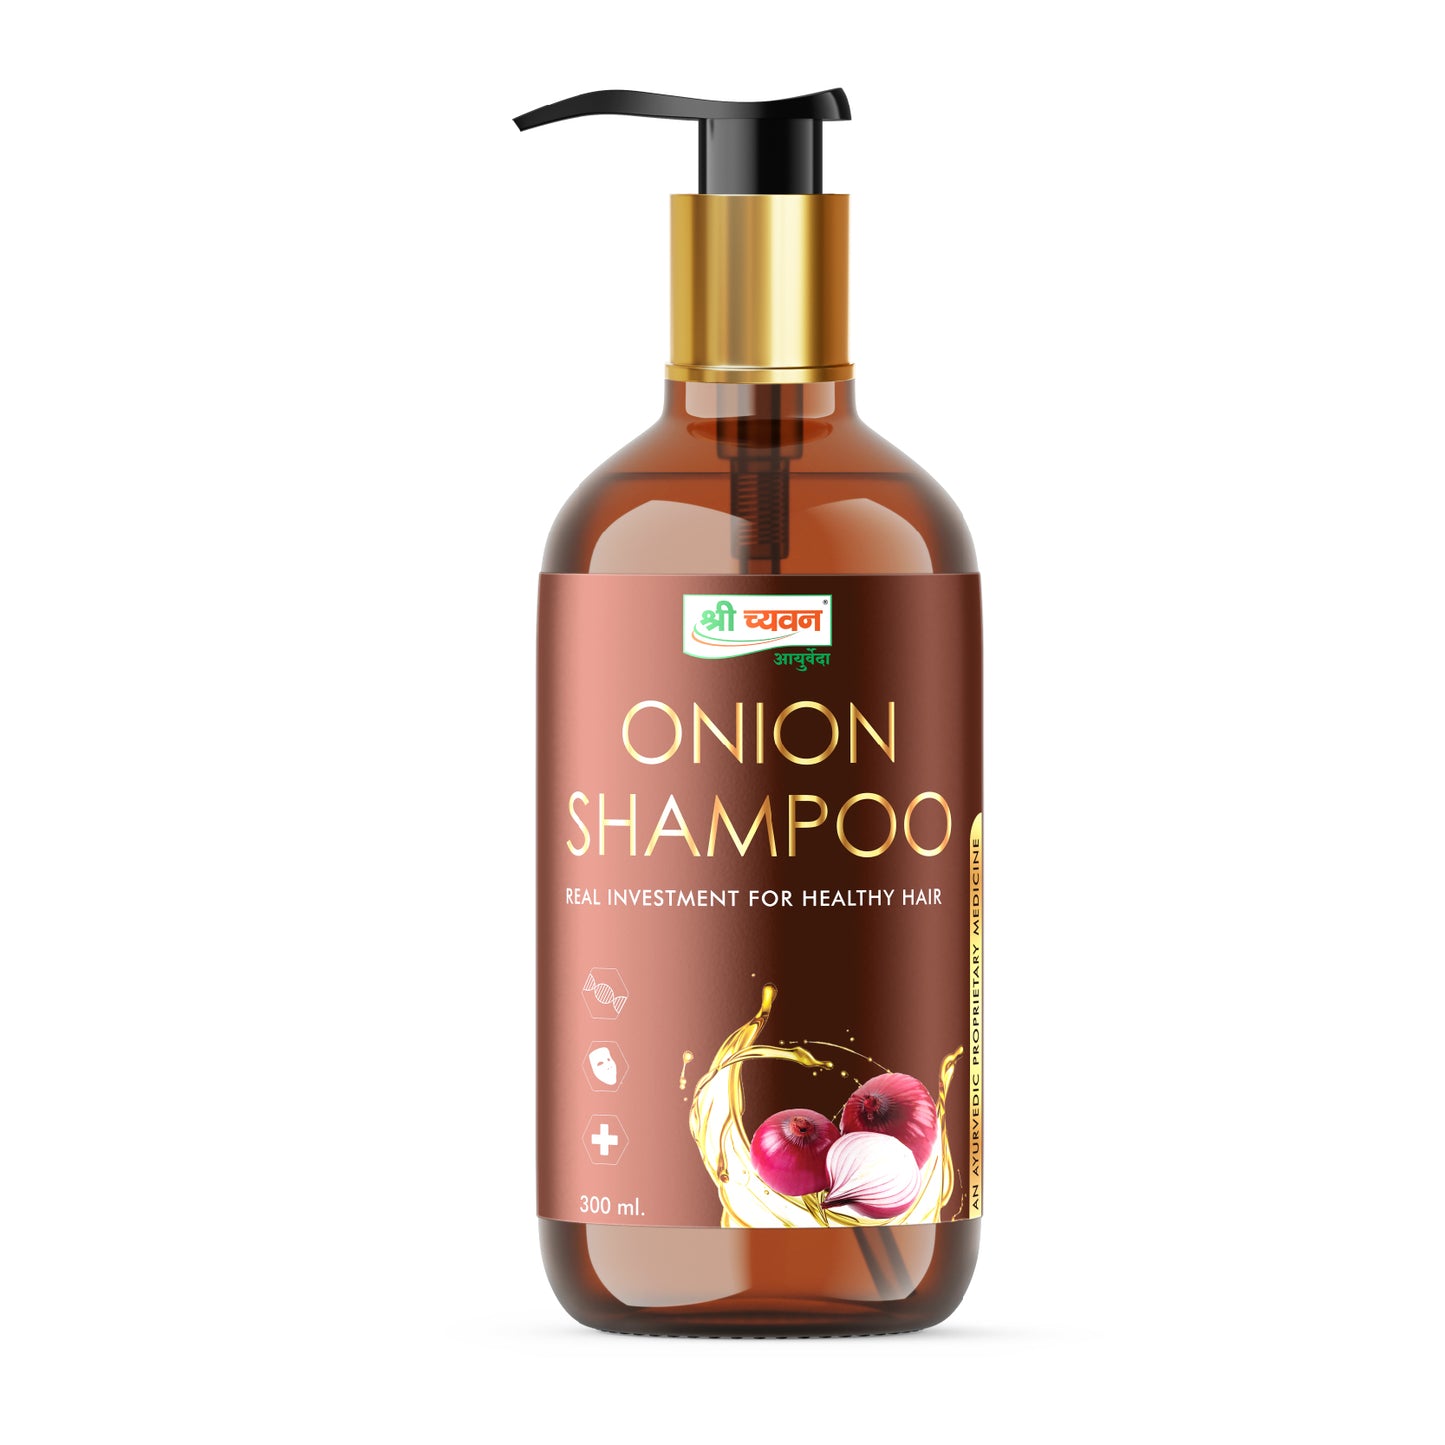   onion Shampoo for healthy hair